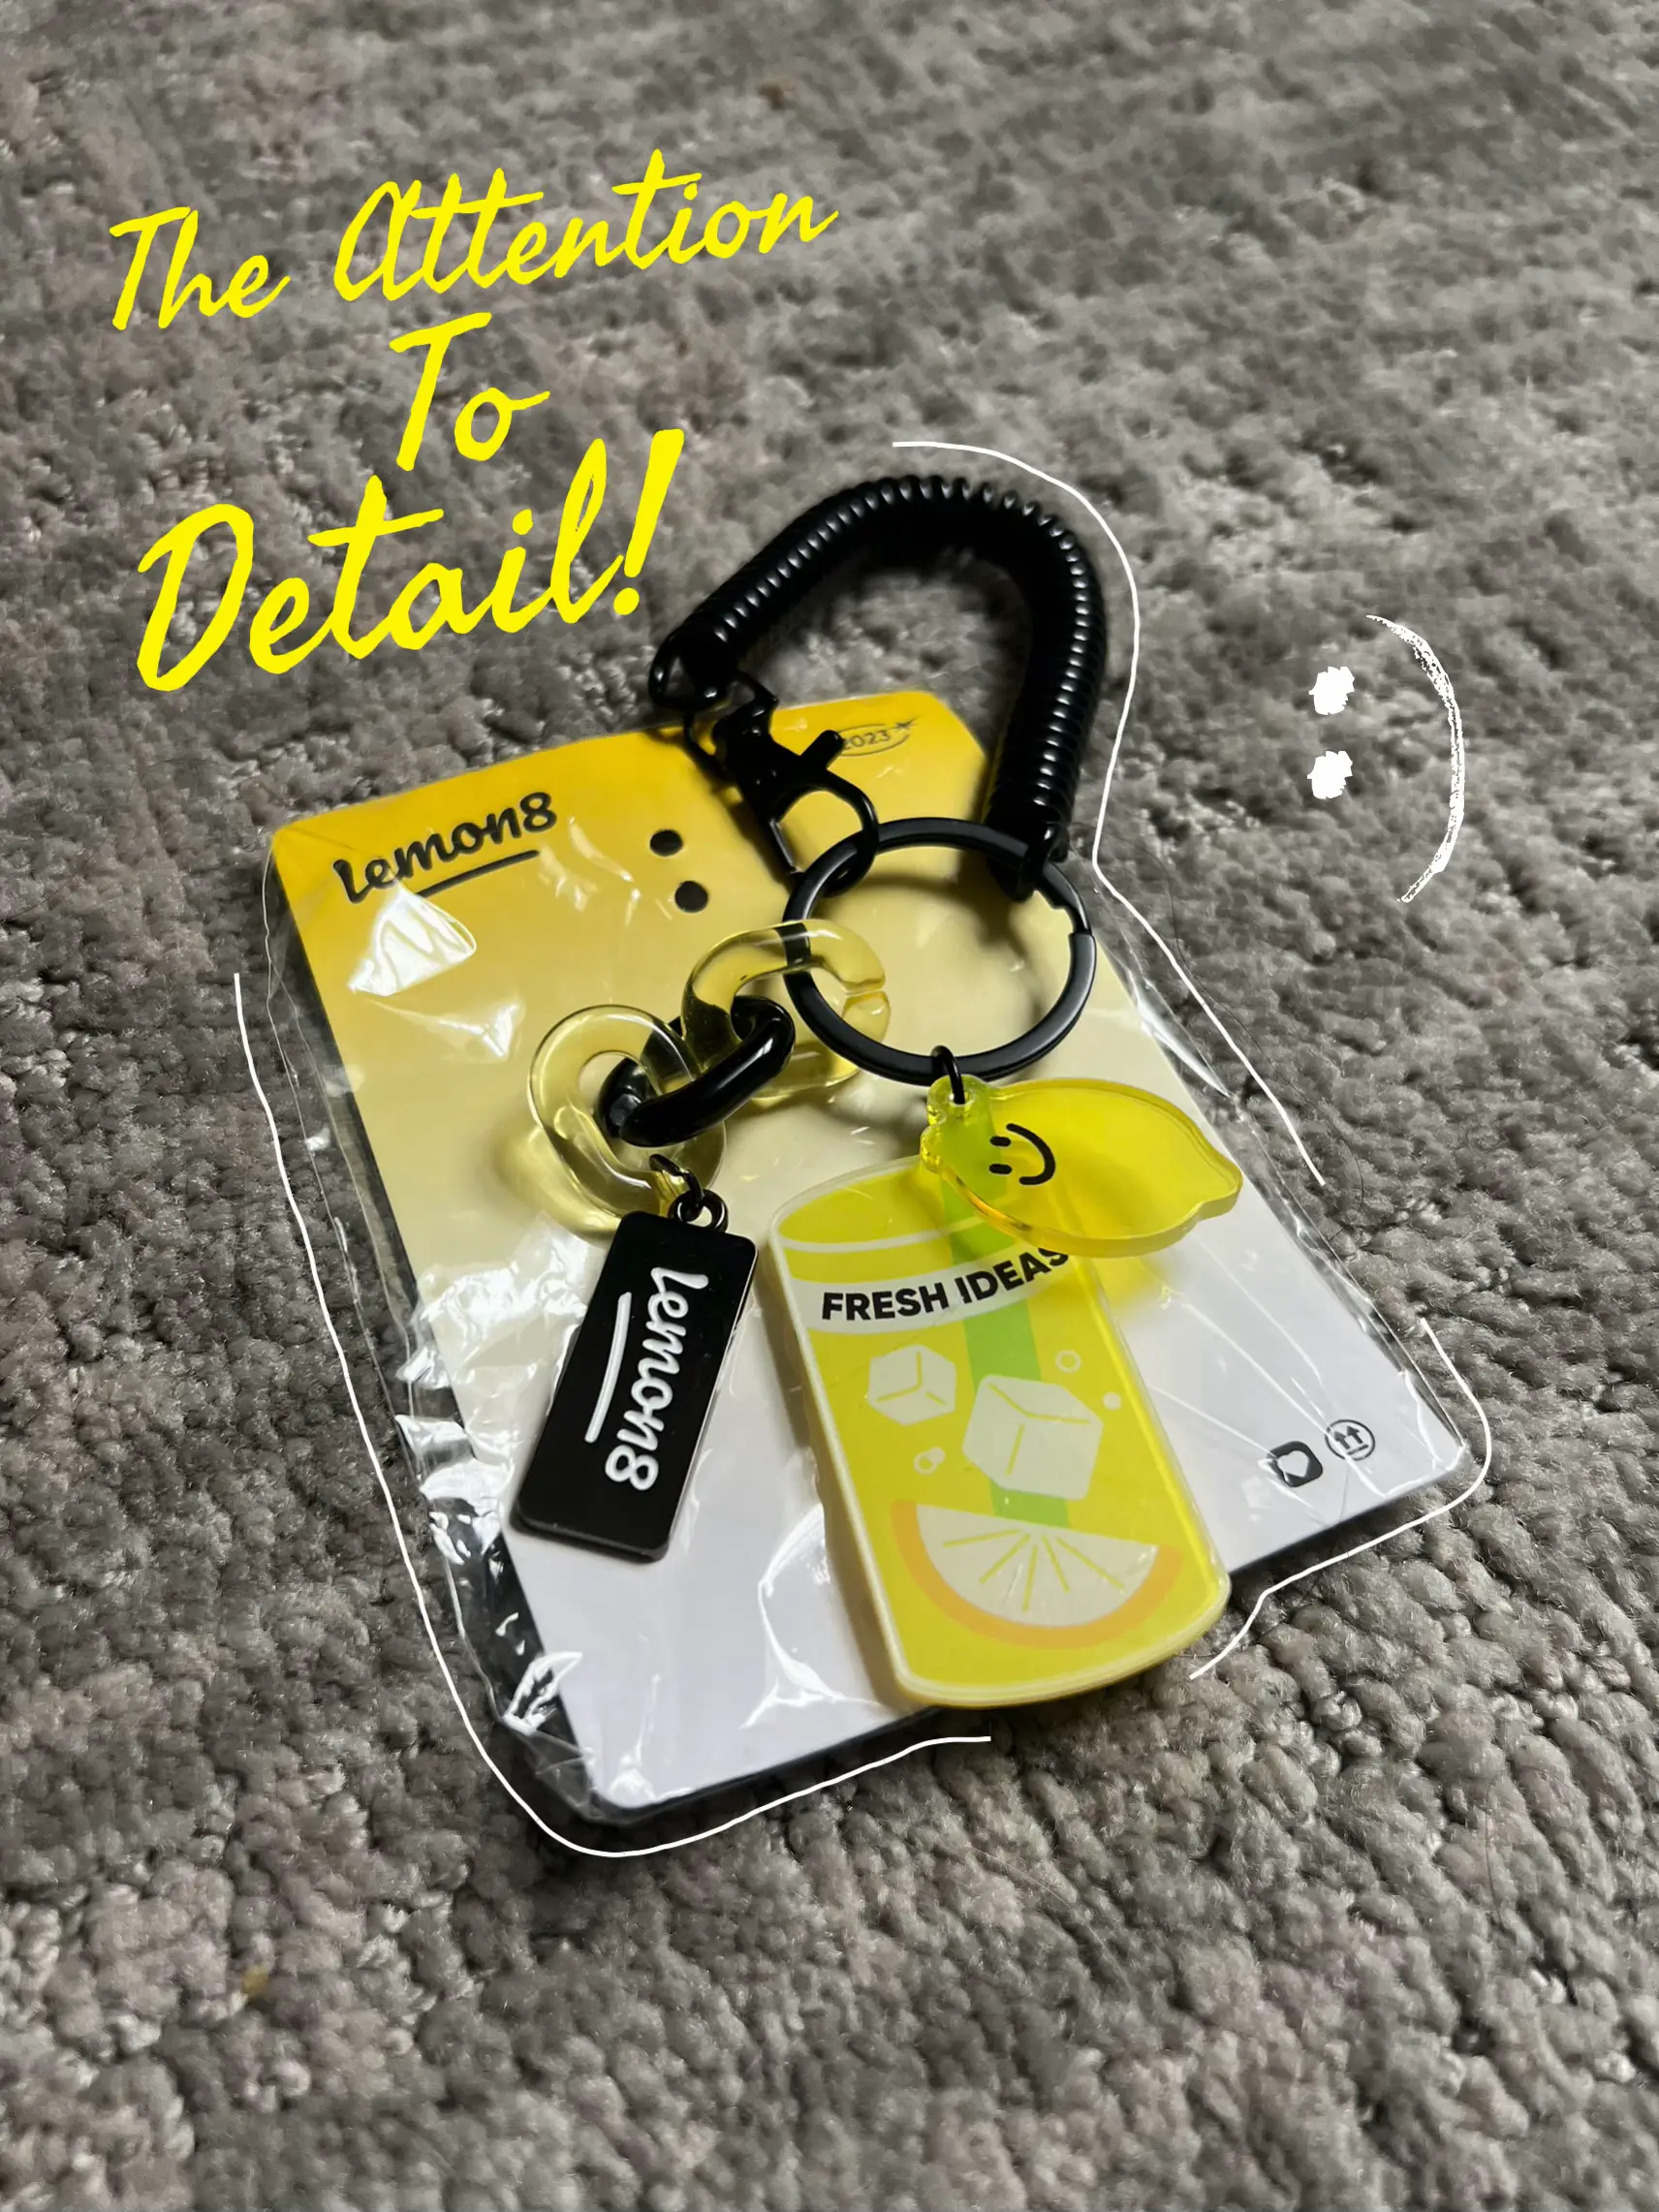  A key chain with a lemon on it.